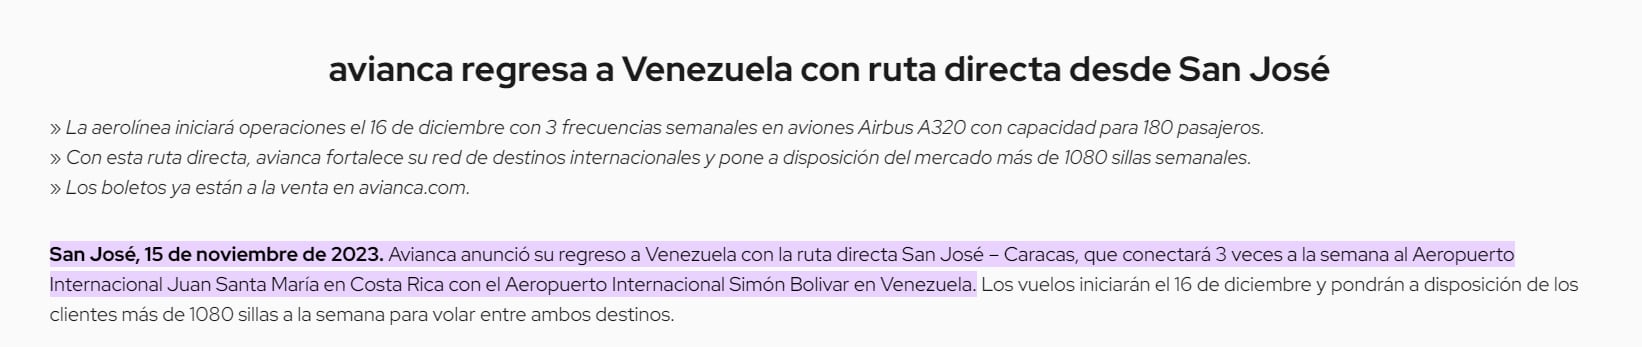 Avianca regresa a Venezuela con ruta directa desde San Jose, Costa Rica -créditowww.avianca.com